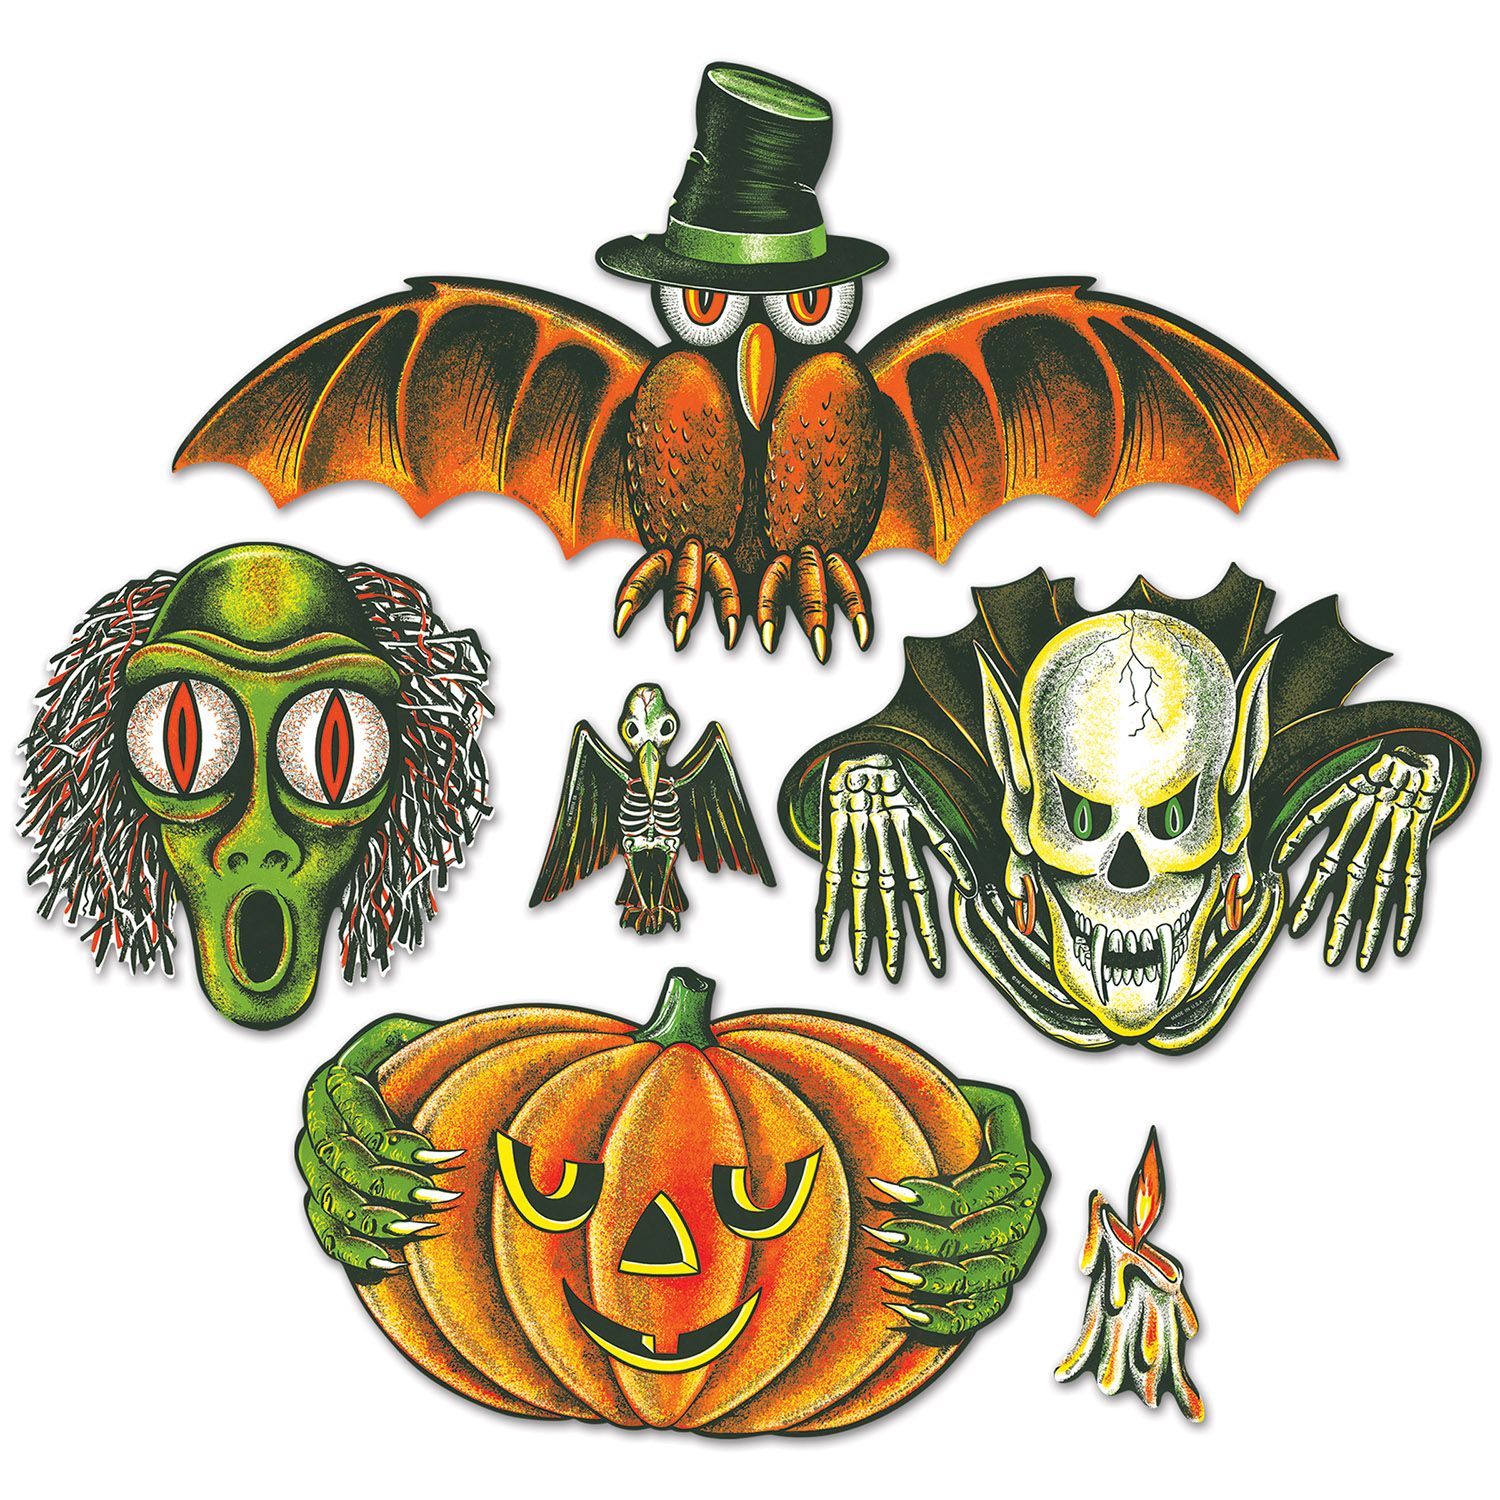 https://www.beistle.com/media/catalog/product/cache/3e8e2b850859b4208267cbc6064f897a/0/0/00428_vintage-halloween-totem-pole-cutouts.jpg